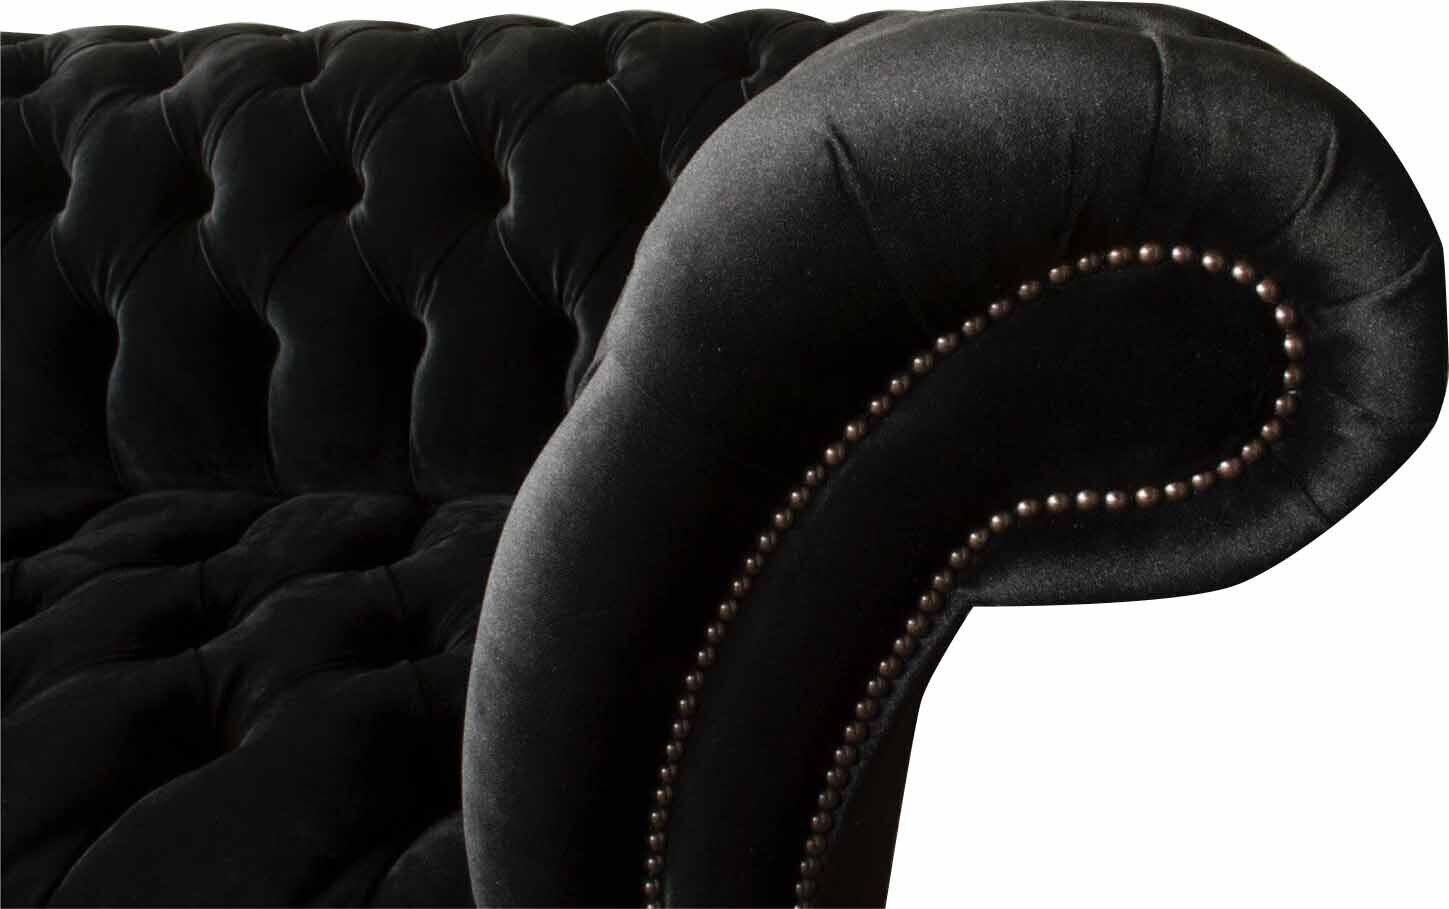 JVmoebel Sofa Chesterfield 2 Sofa Couch Designer Textil, Luxus Polster Sitzer Made Couchen In Europe